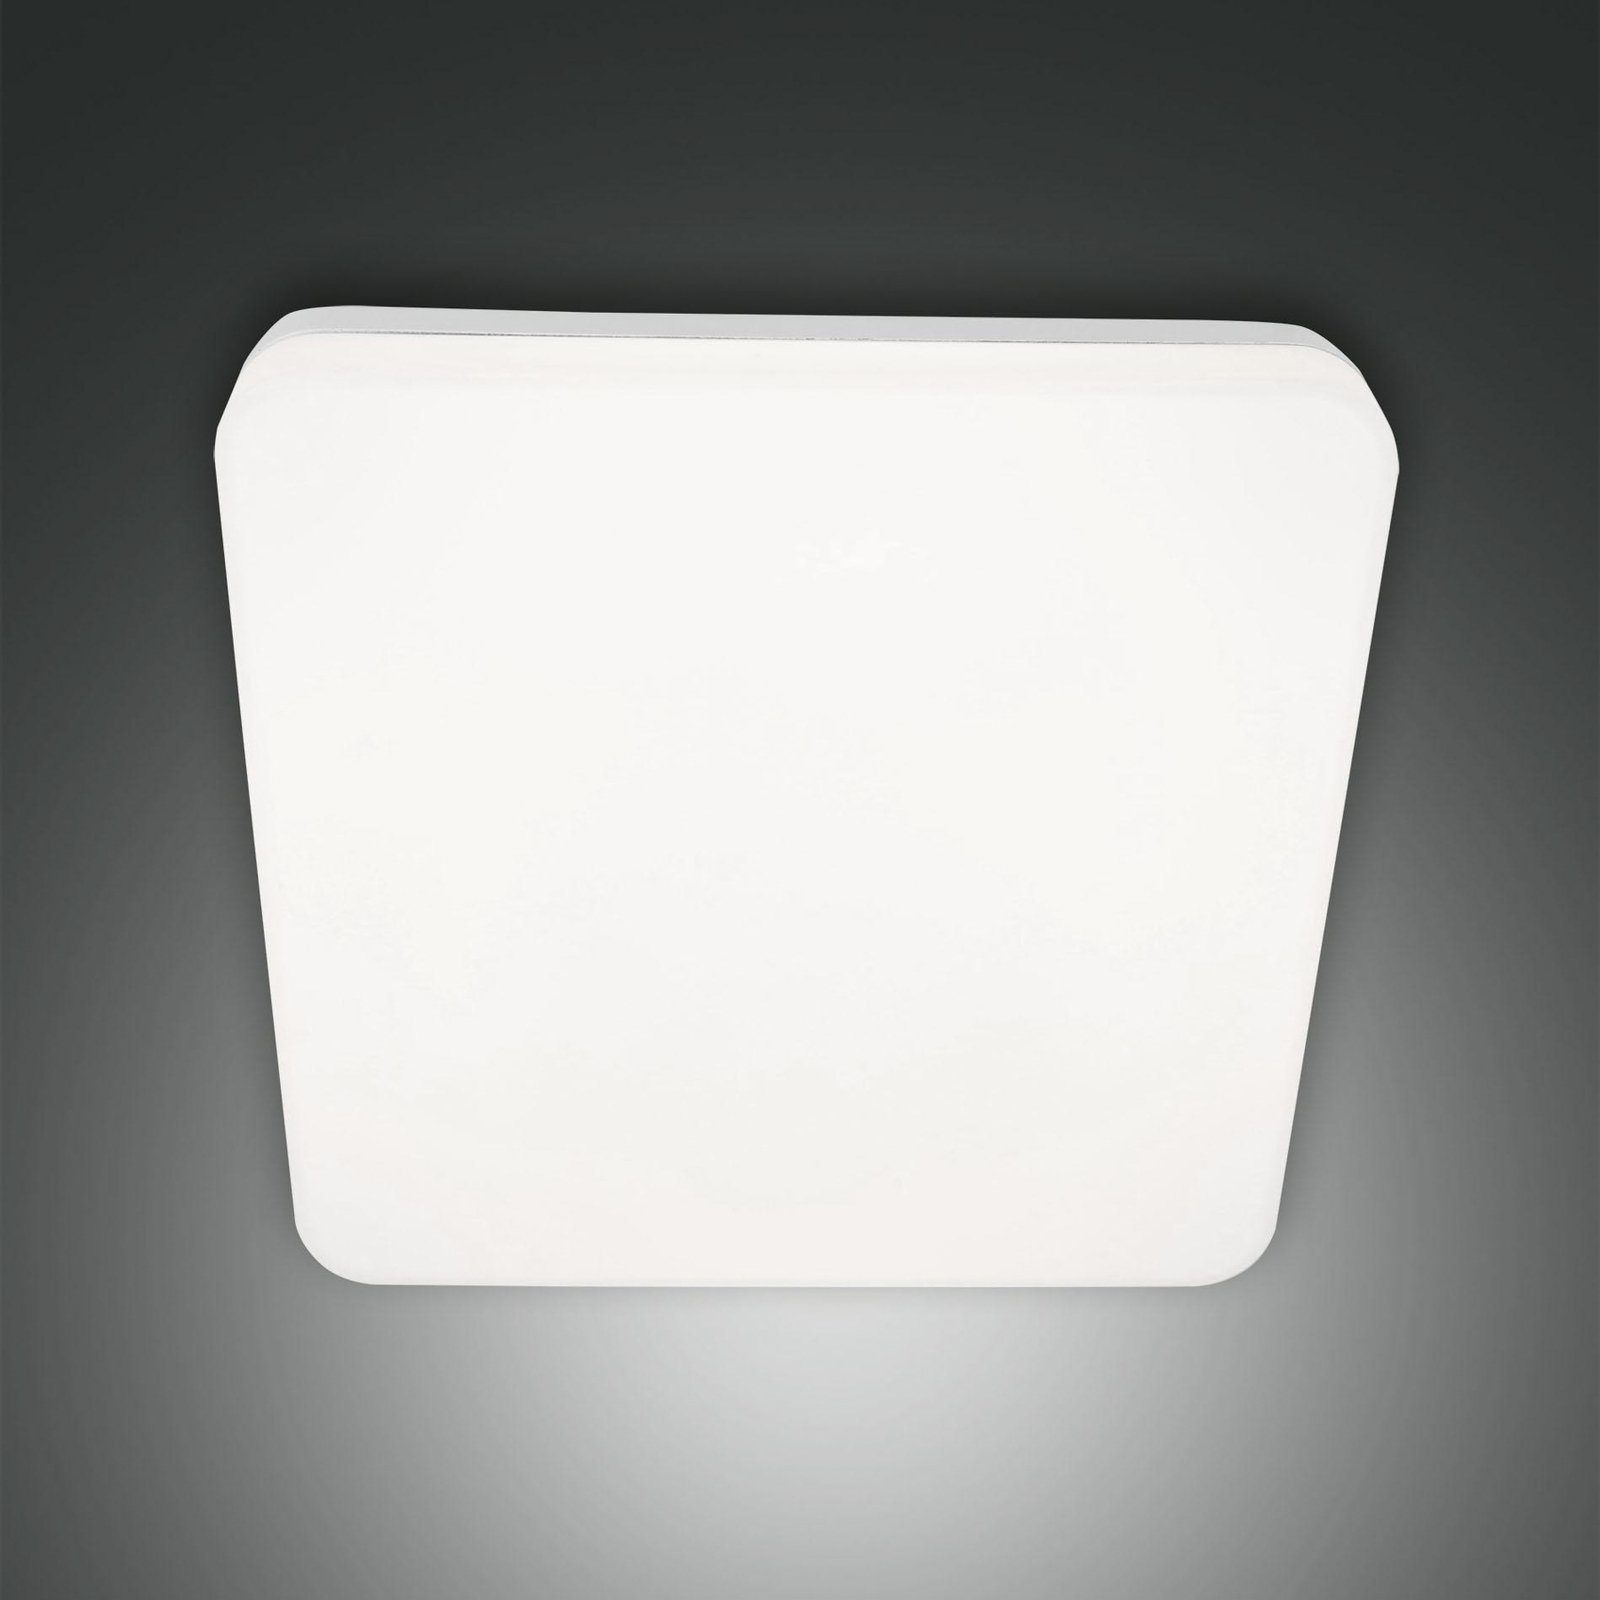 Folk LED utomhustaklampa, sensor, 28 x 28 cm, vit, IP65